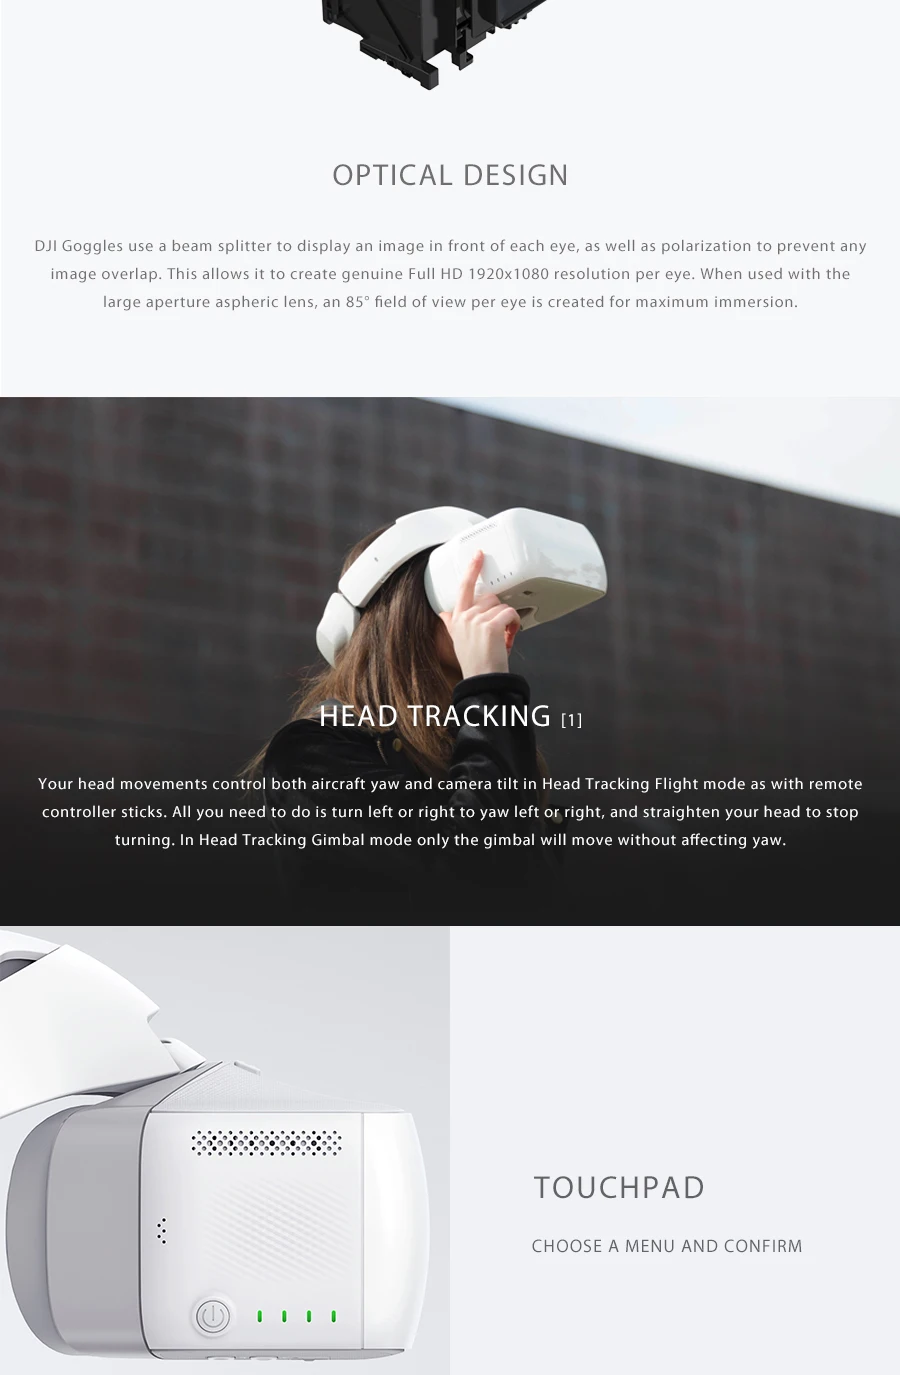 DJI Goggles FPV HD VR очки для DJI Spark Mavic Pro Phantom 4 Inspire дроны 1920x1080 экраны для отслеживания головы